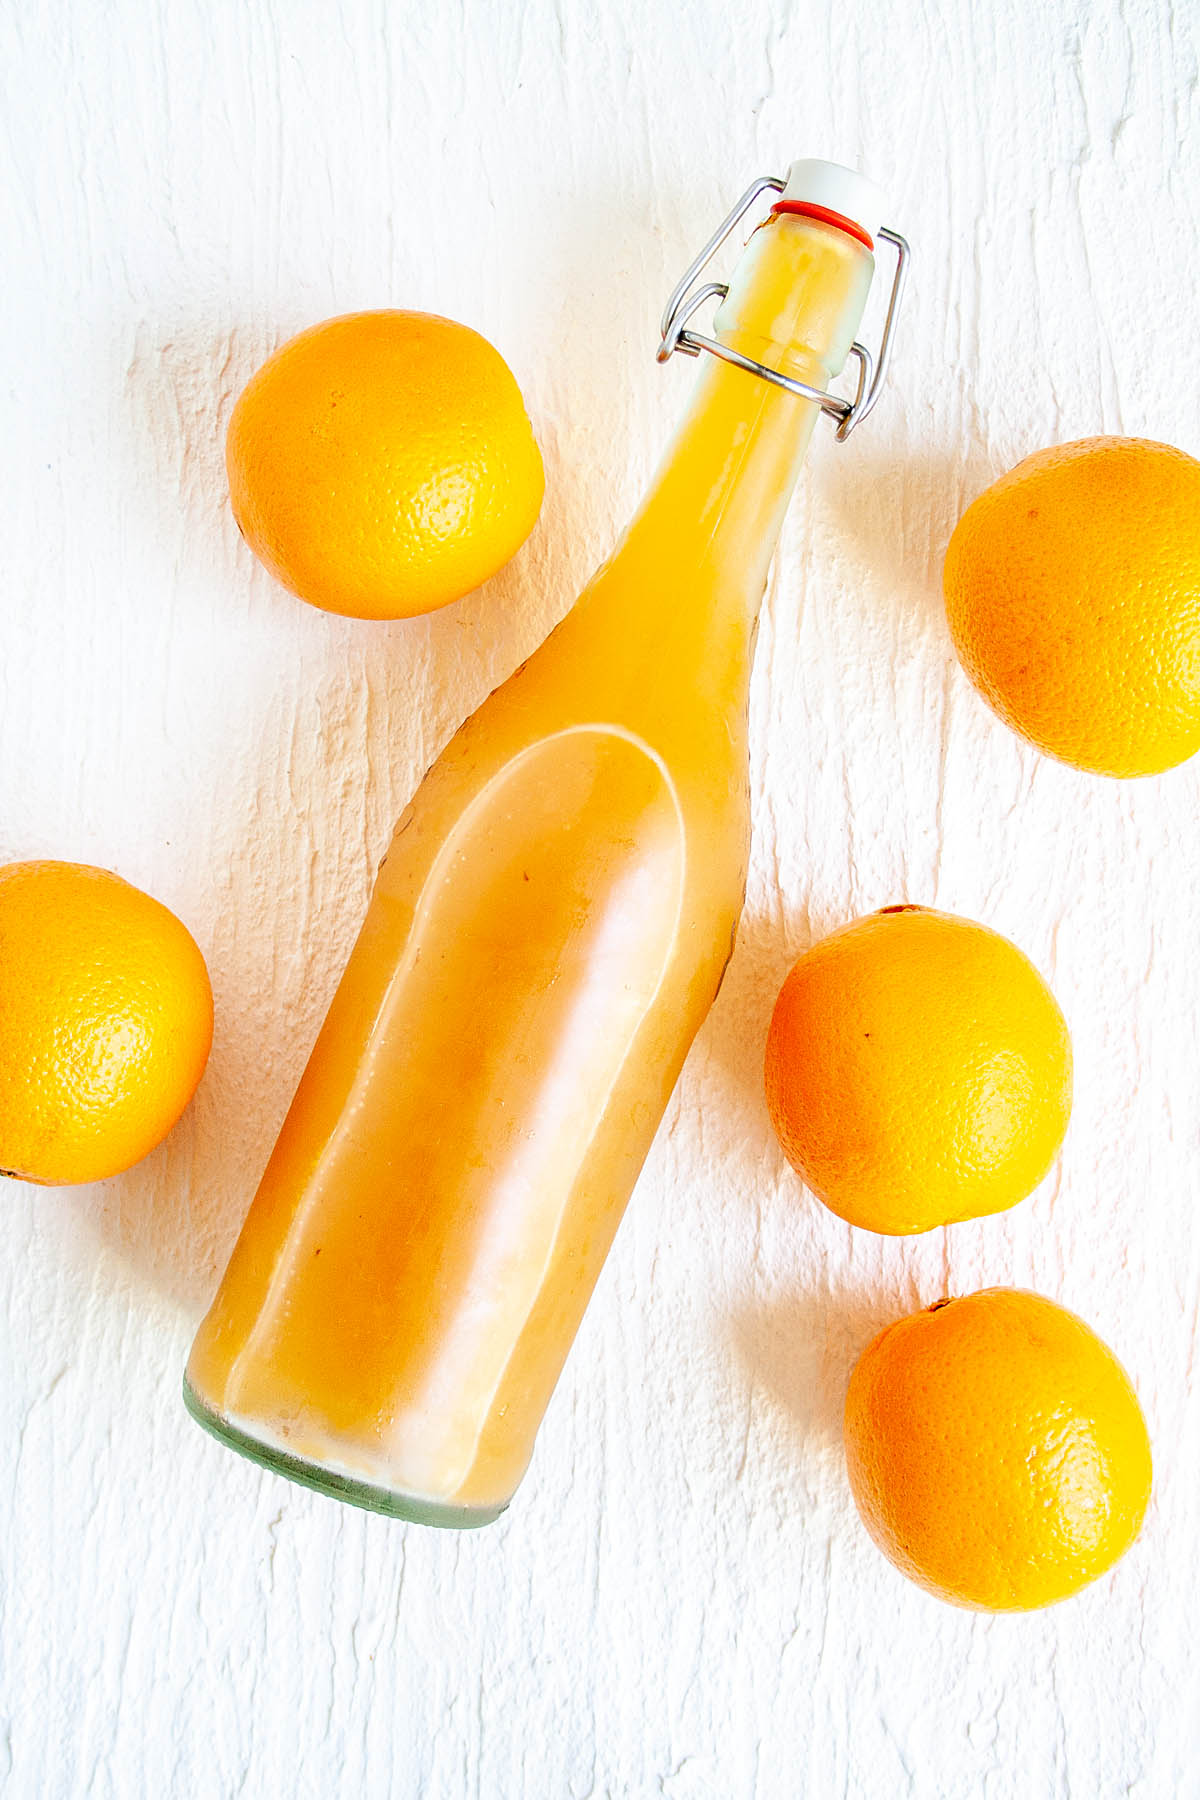 Orange Kombucha in bottle with oranges.